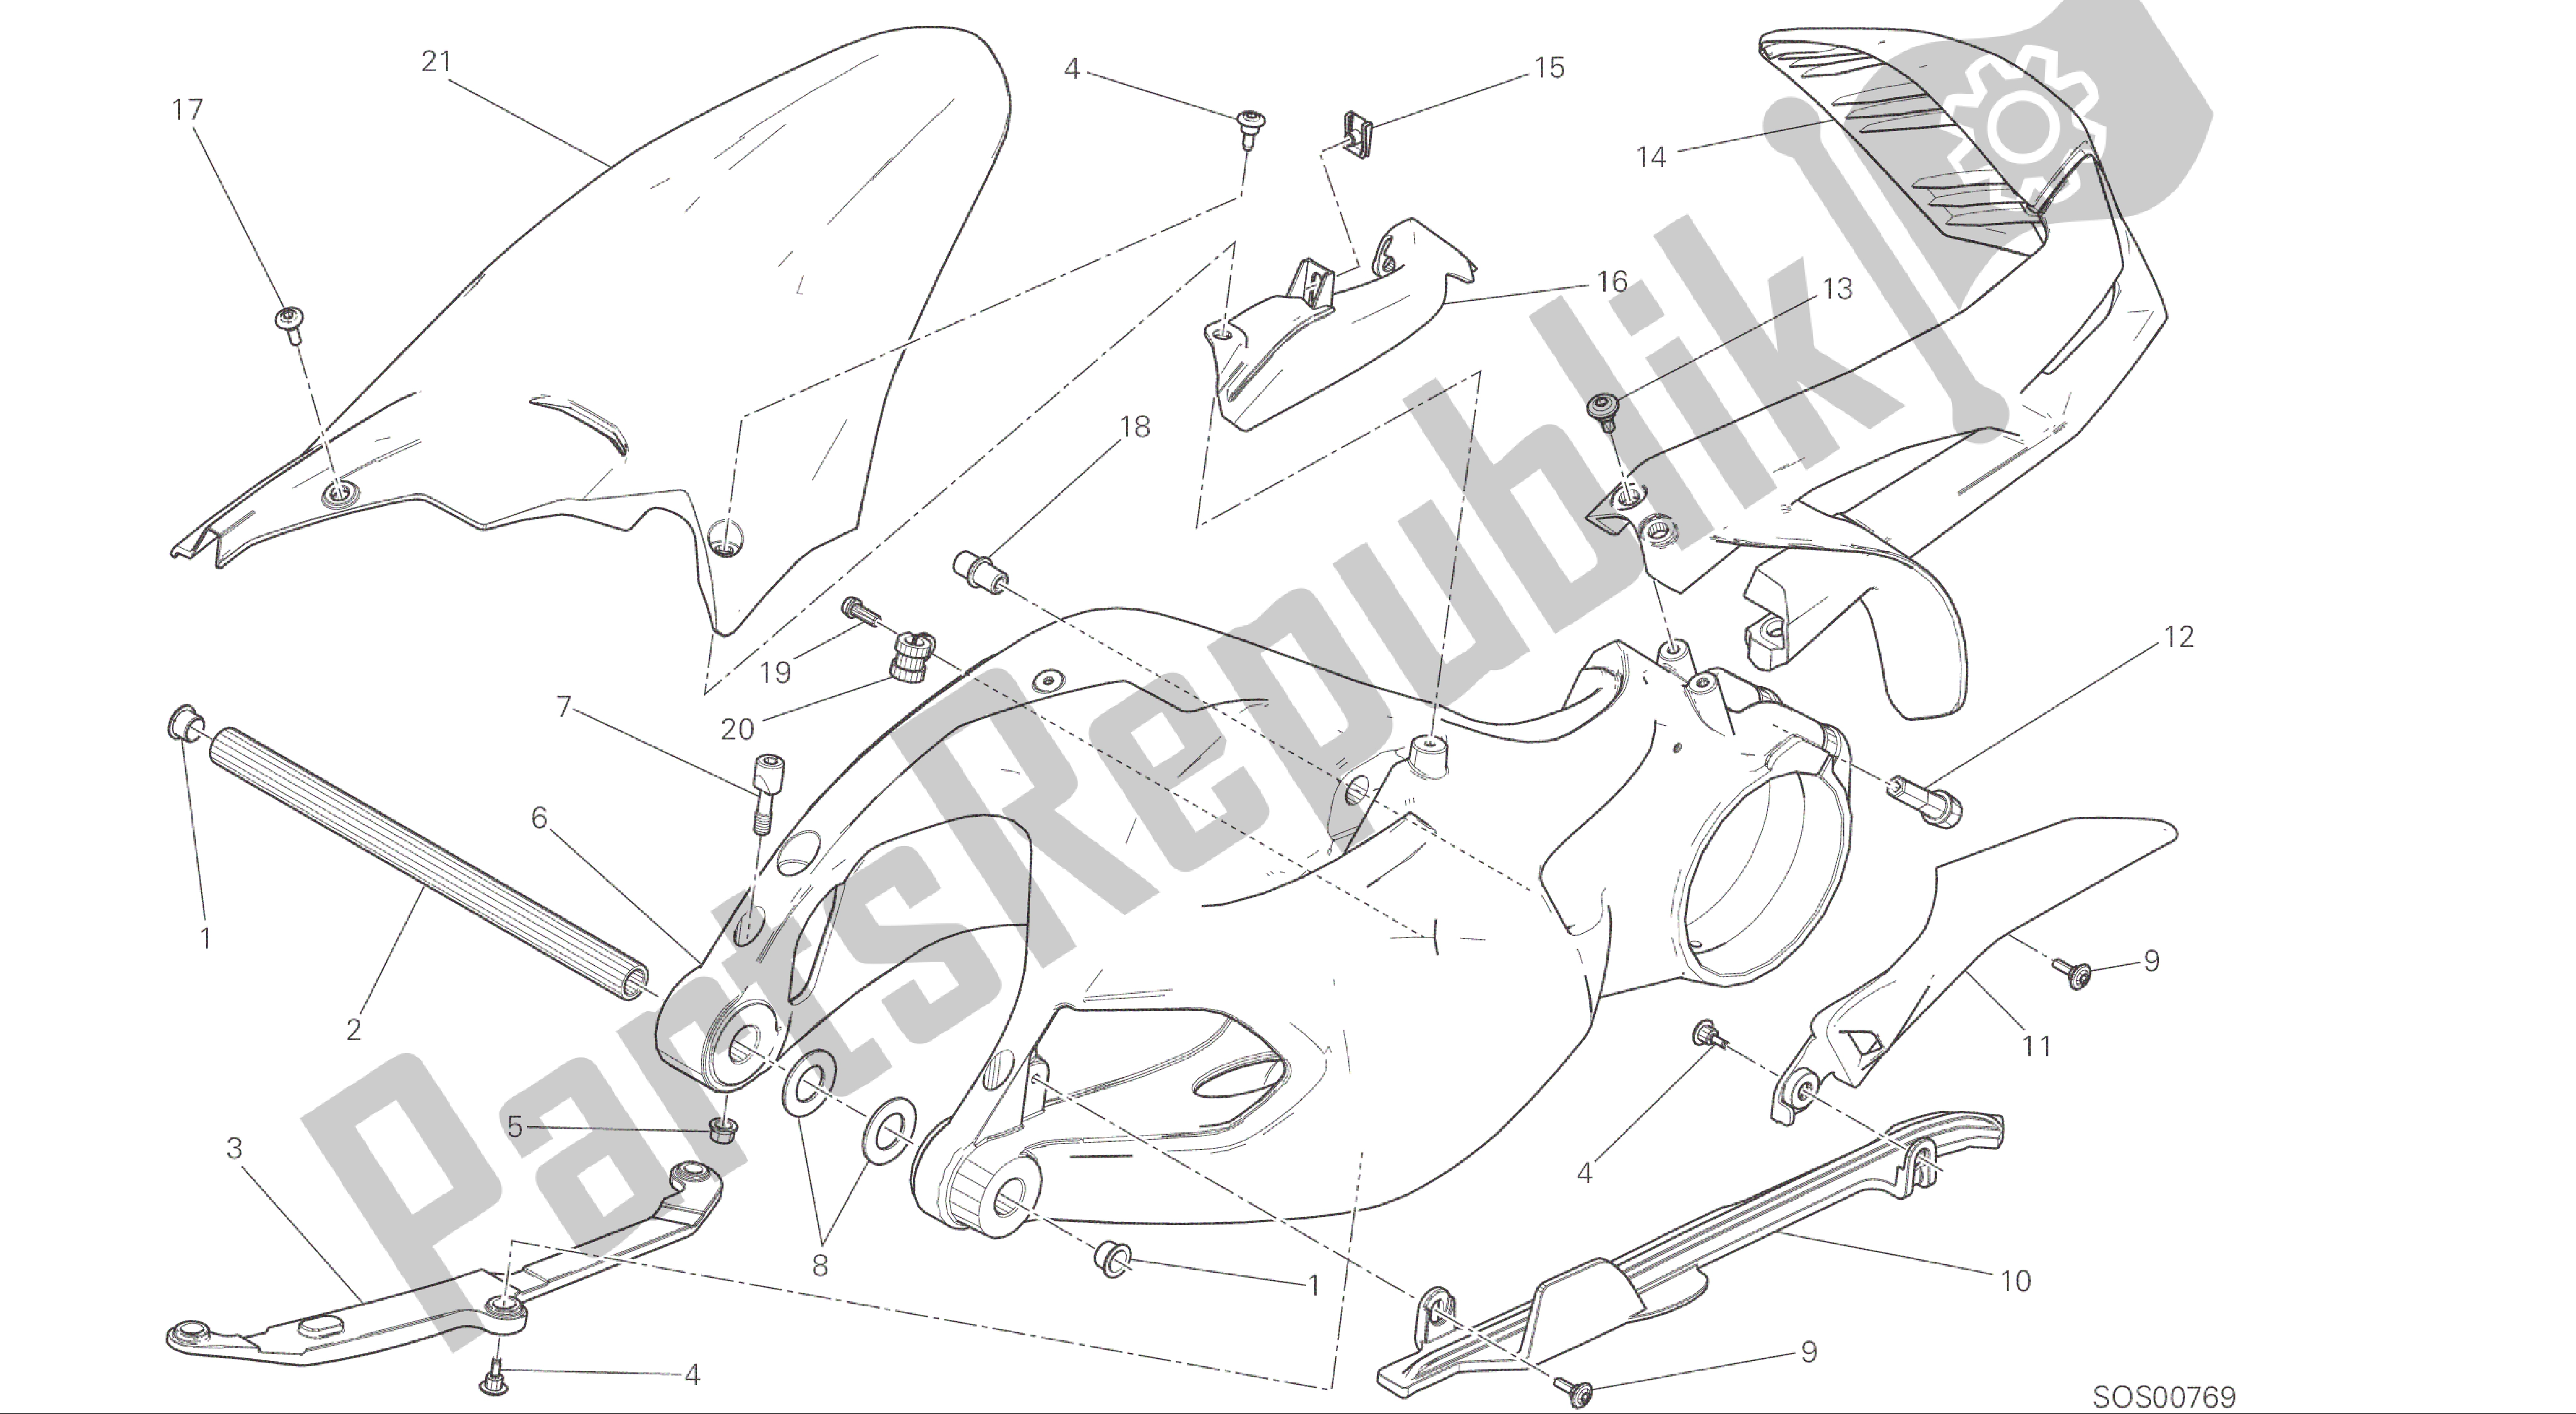 Todas las partes para Dibujo 28a - Brazo Oscilante [mod: Ms1200; Xst: Marco De Grupo Aus, Eur, Fra, Jap] de Ducati Multistrada 1200 2015